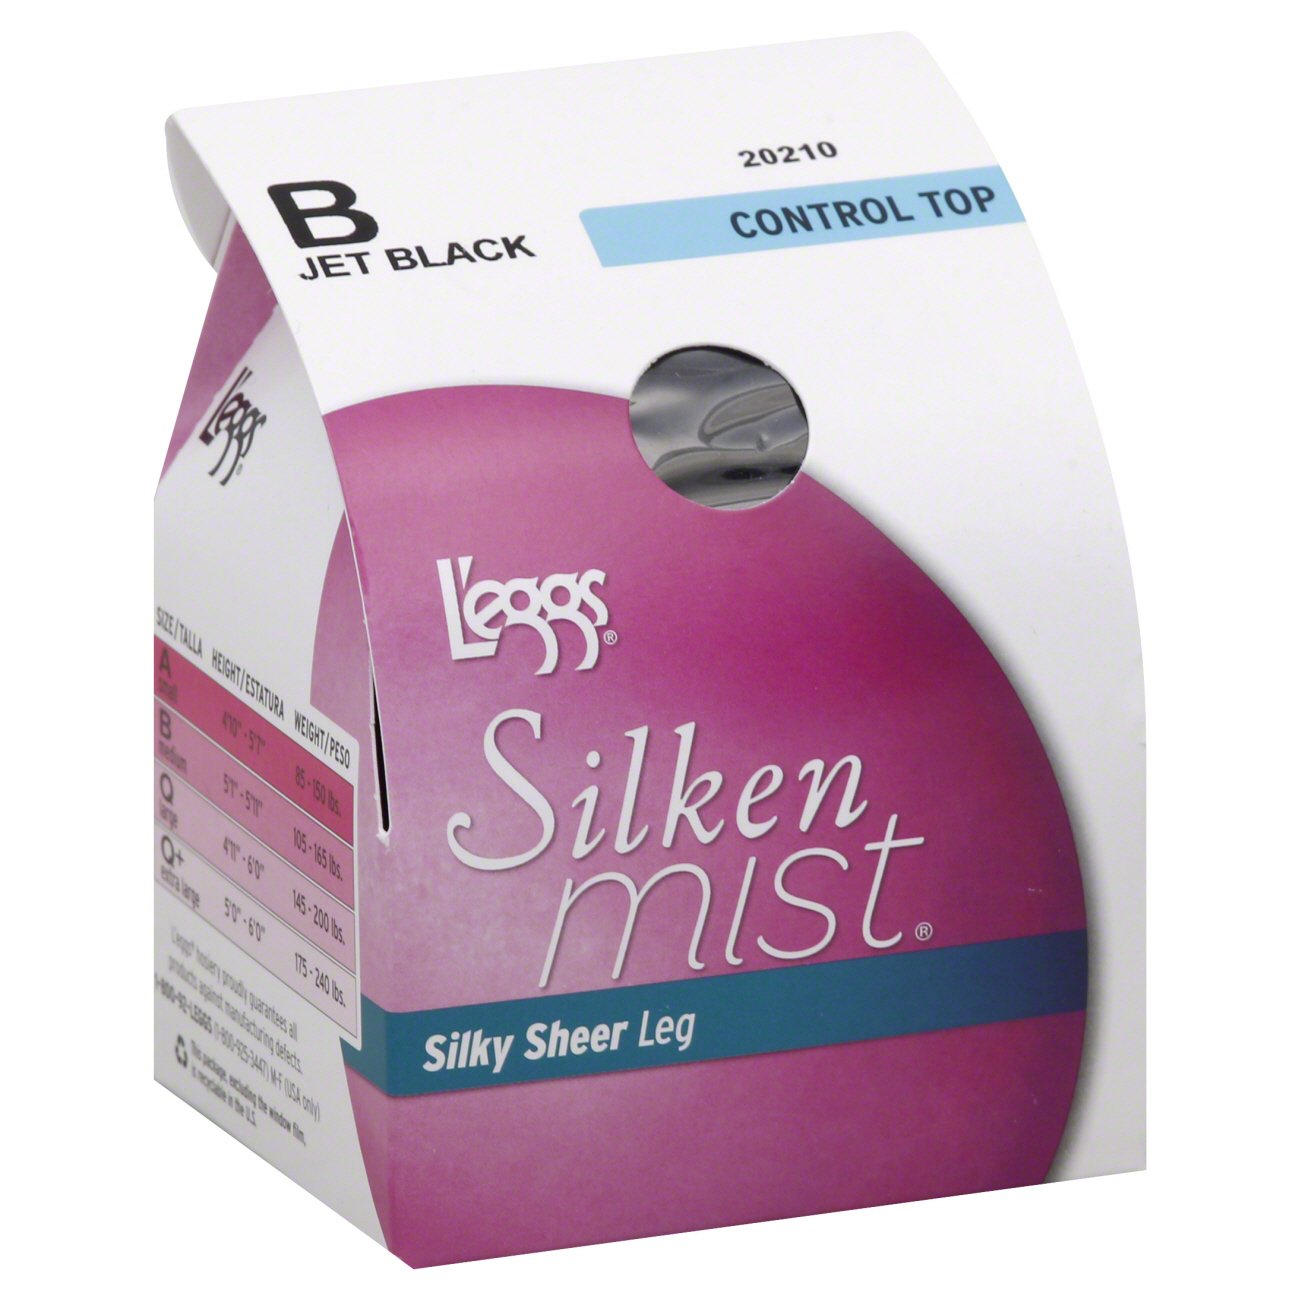 L'eggs Silken Mist Control Top Silky Sheer Leg Jet Black Size B ...